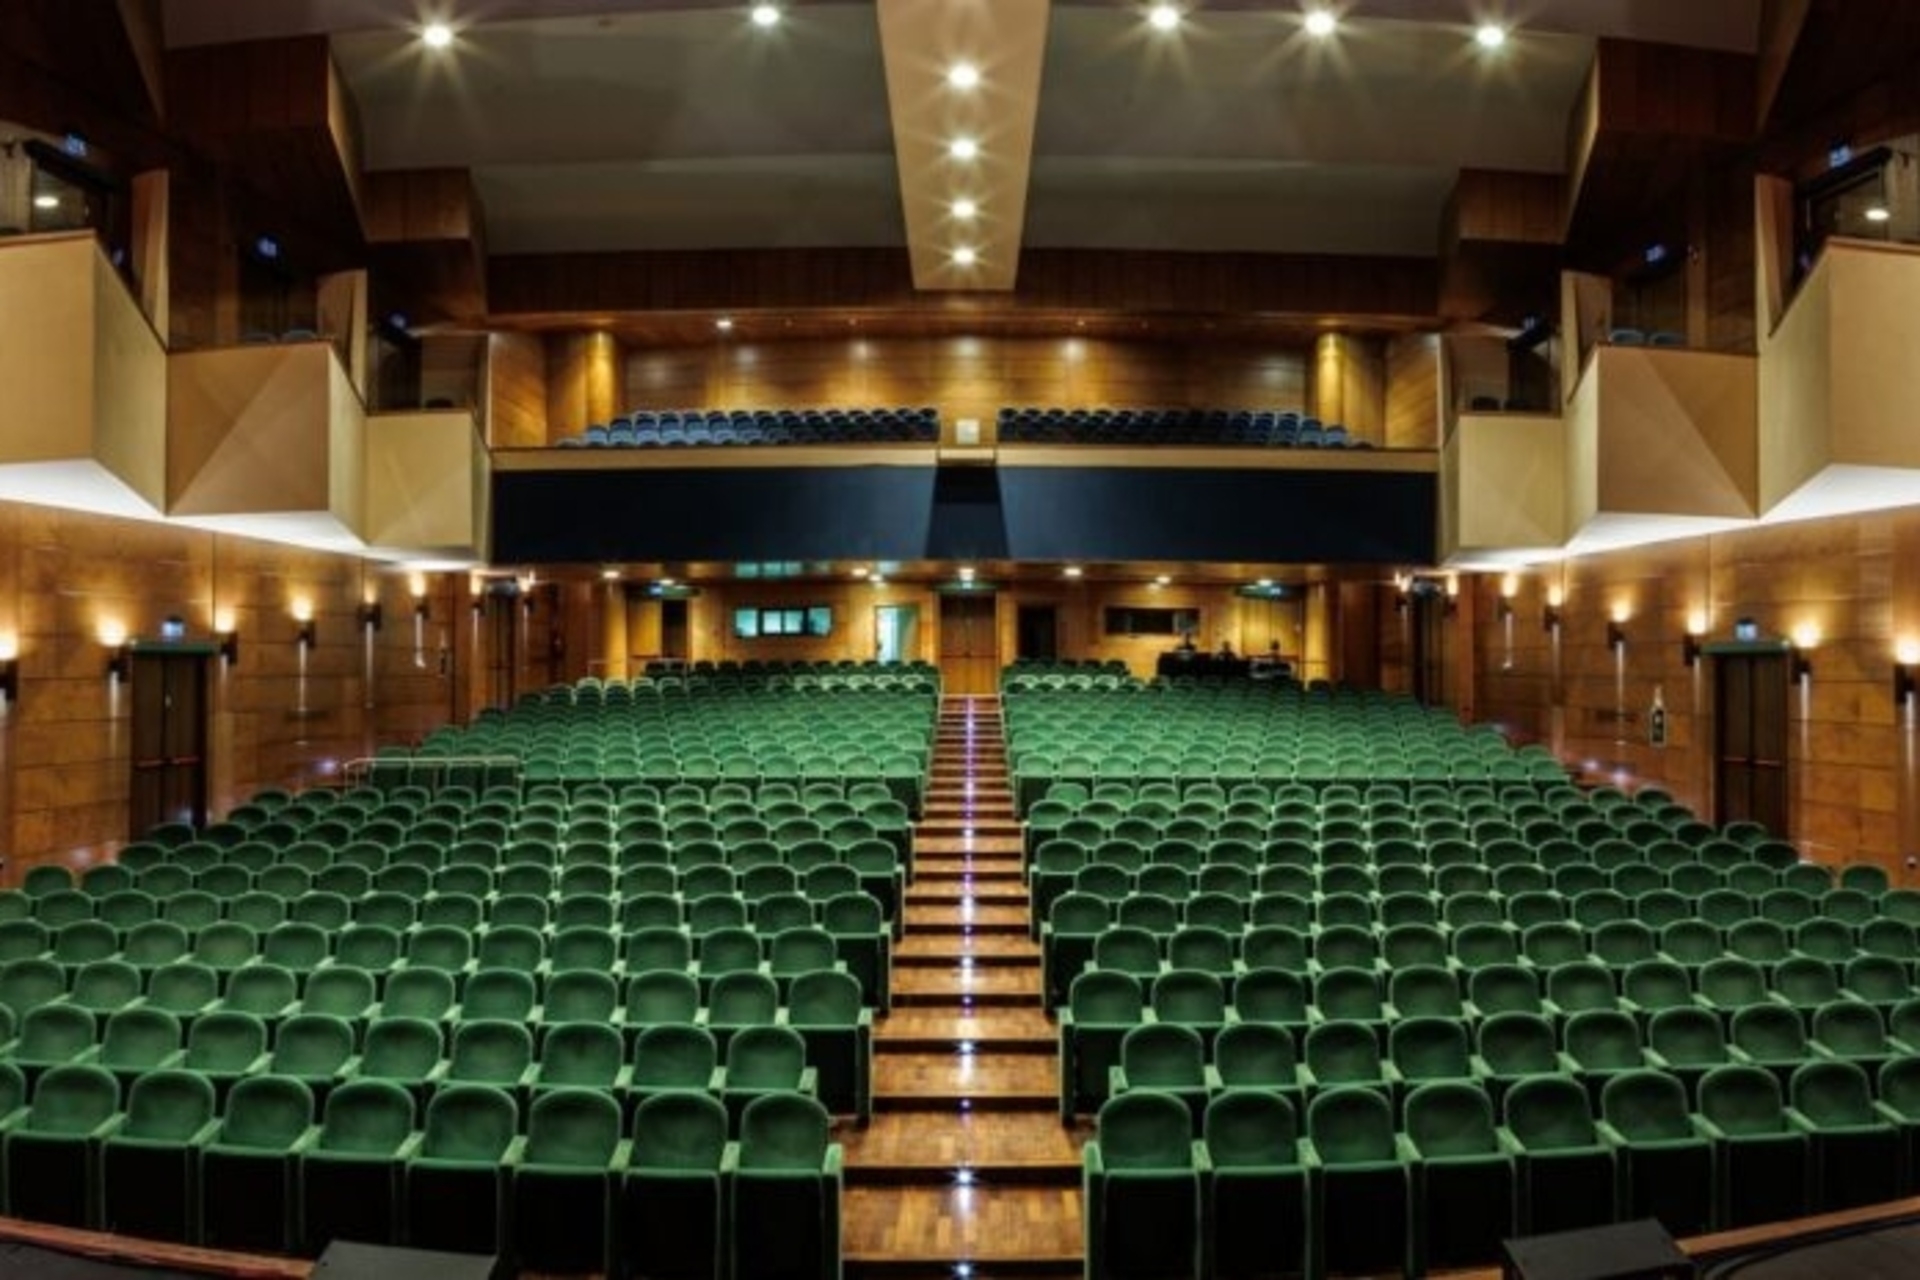 udržateľné divadlo: Teatro Massimo v Cagliari